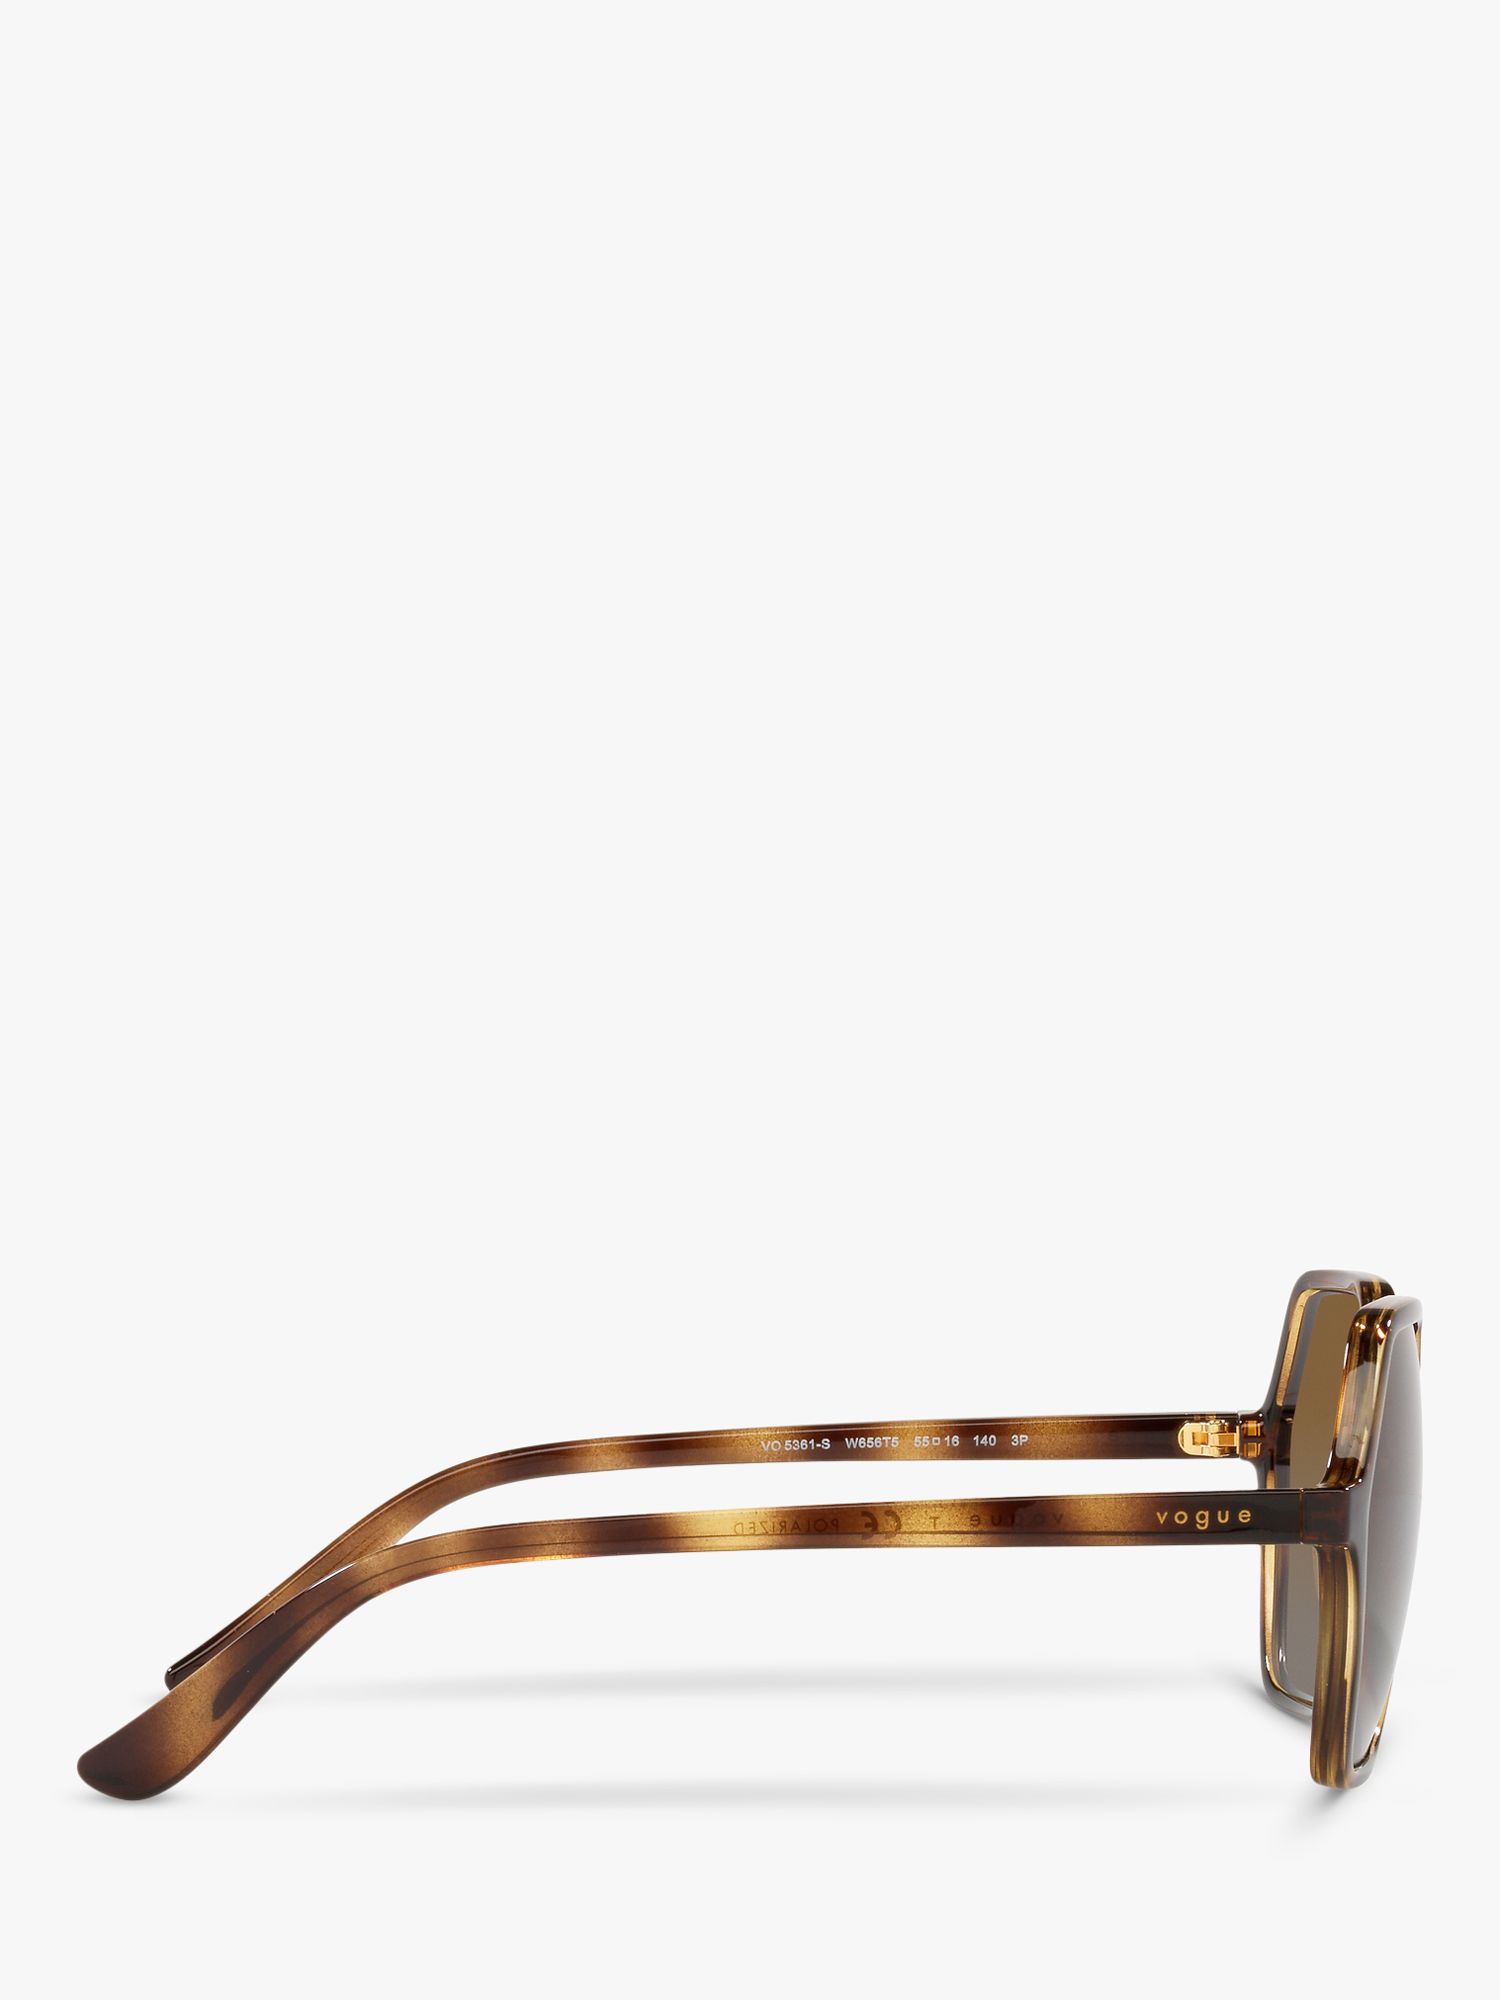 Buy Vogue VO5361S Women's Polarised Irregular Sunglasses, Tortoise/Brown Gradient Online at johnlewis.com